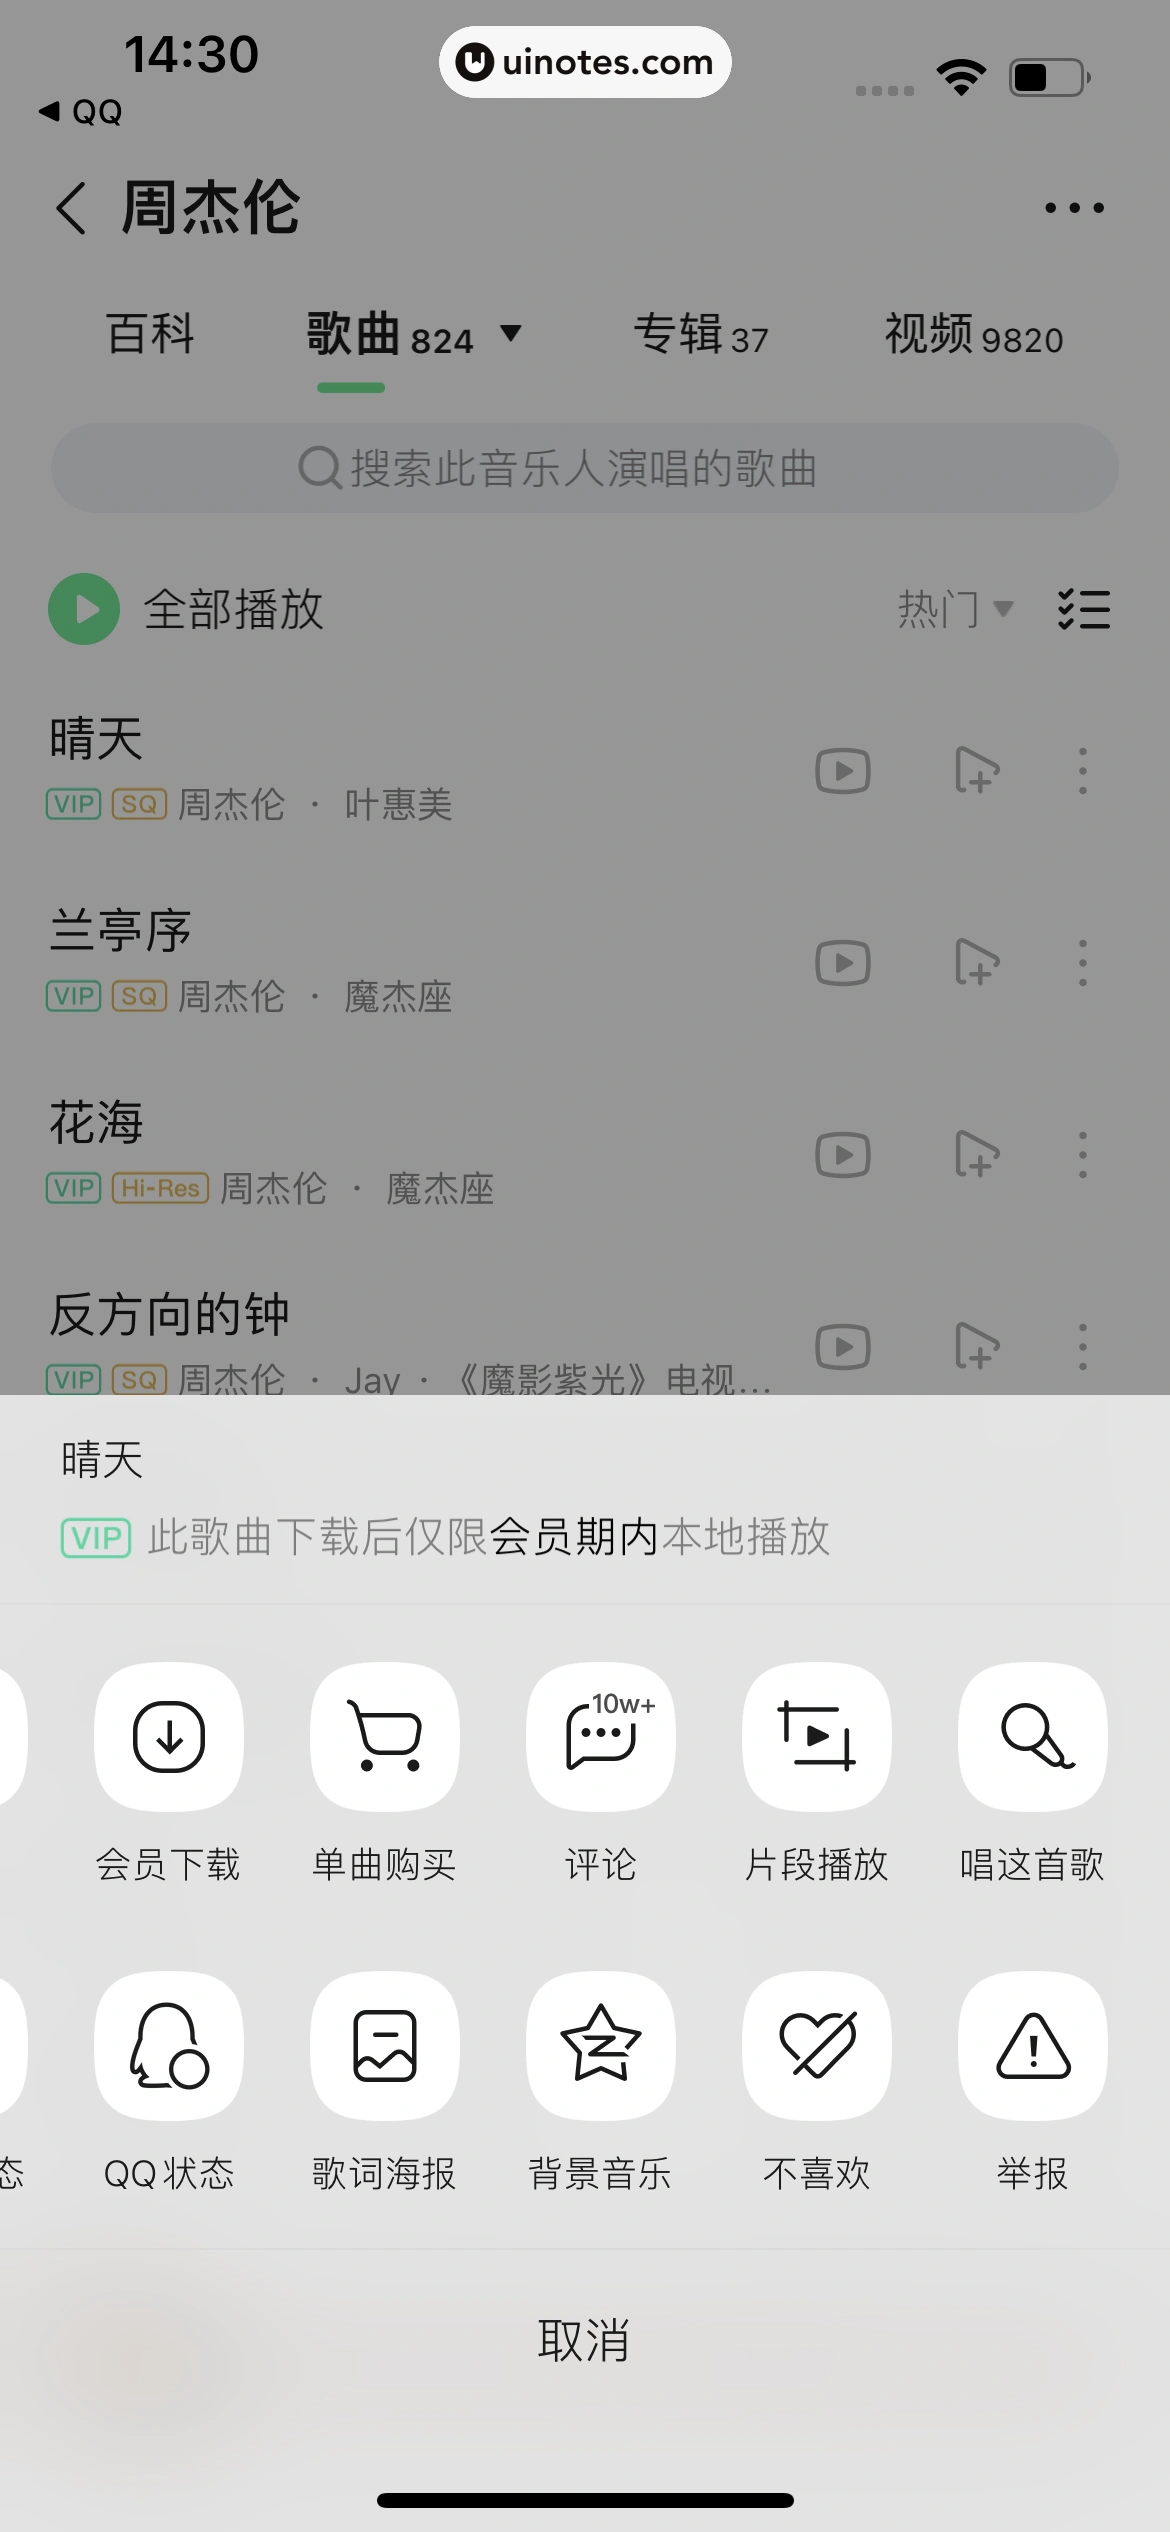 QQ音乐 App 截图 047 - UI Notes